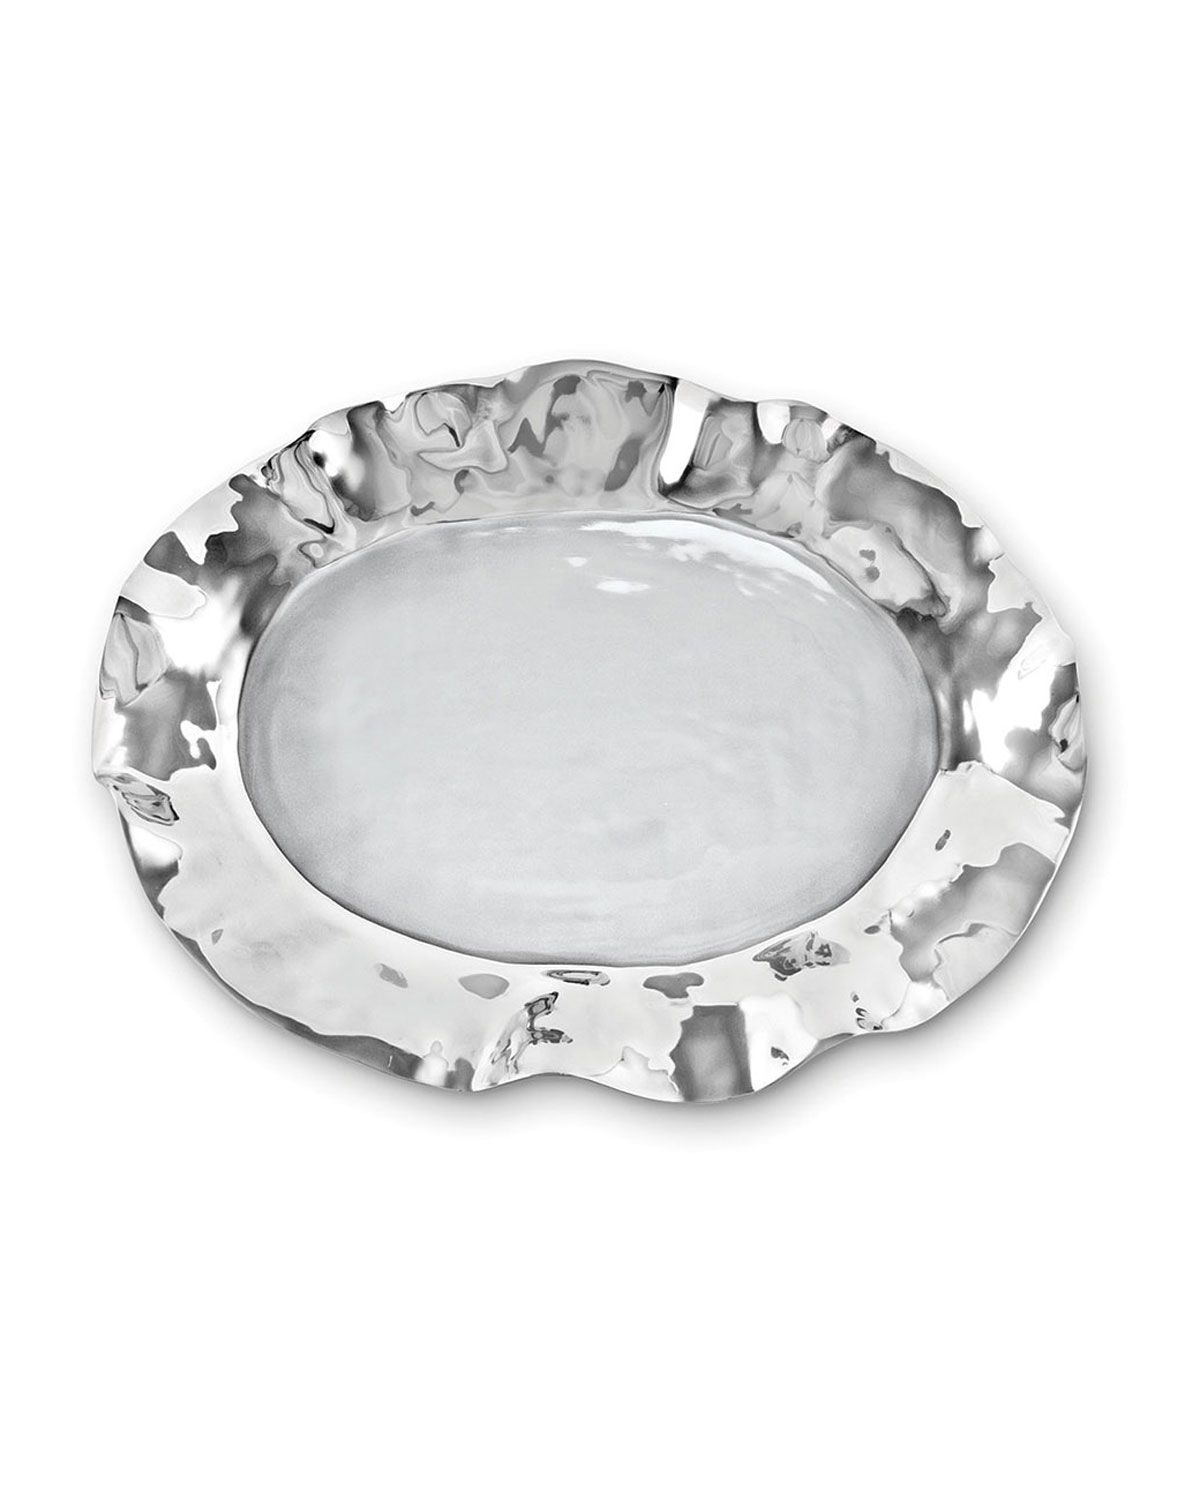 Vento Large Olanes Oval Platter | Neiman Marcus